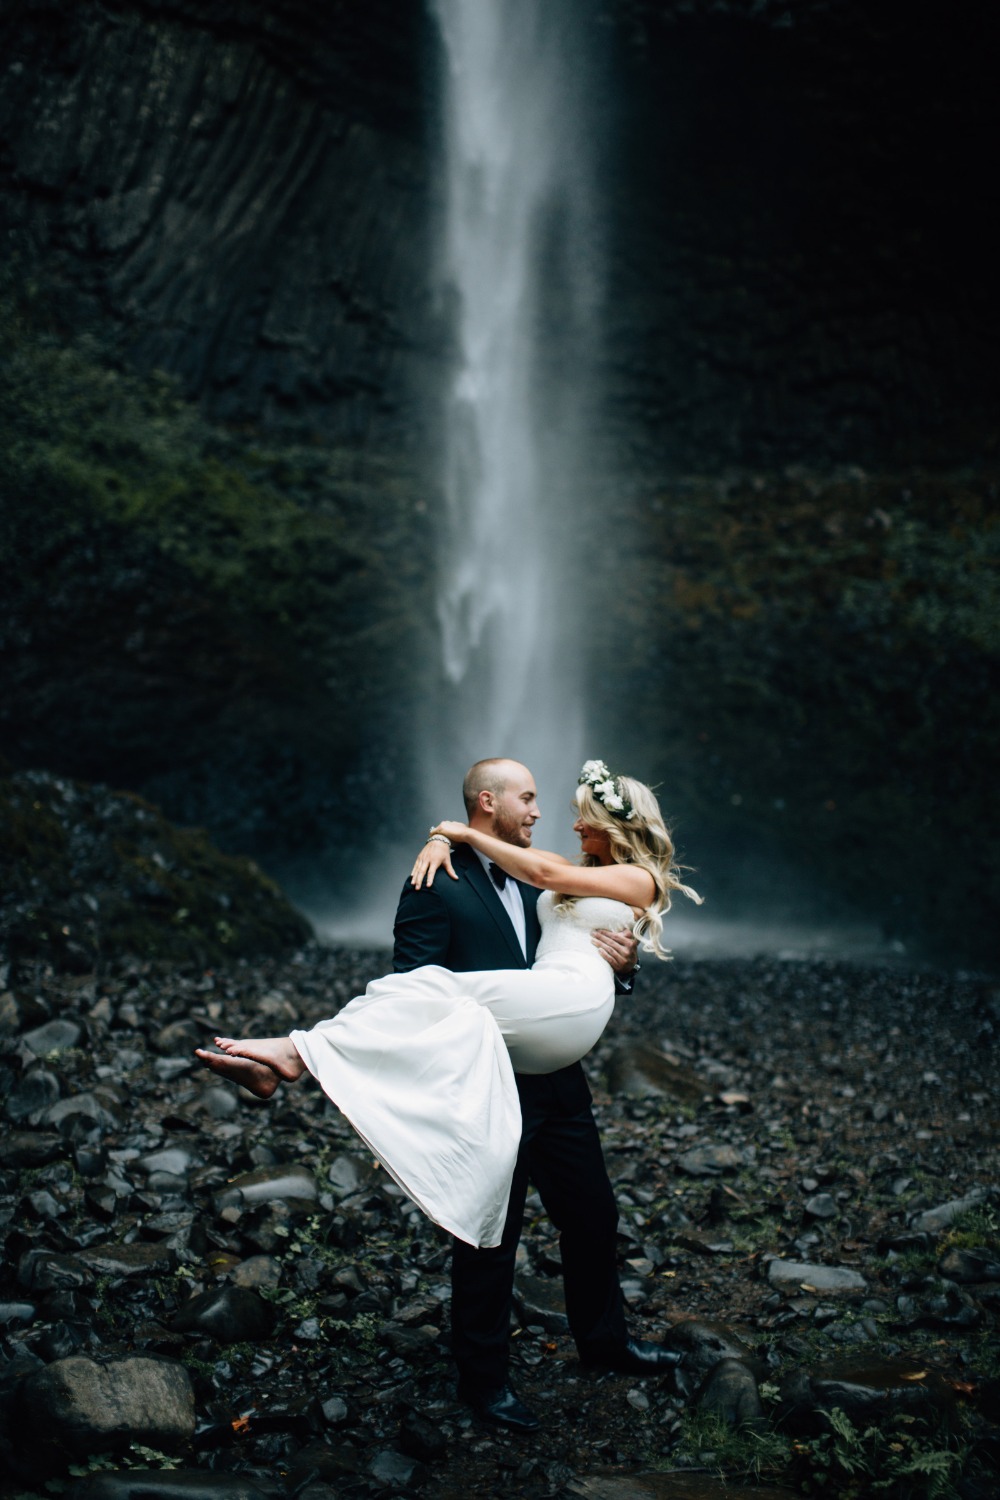 Waterfall wedding photo idea